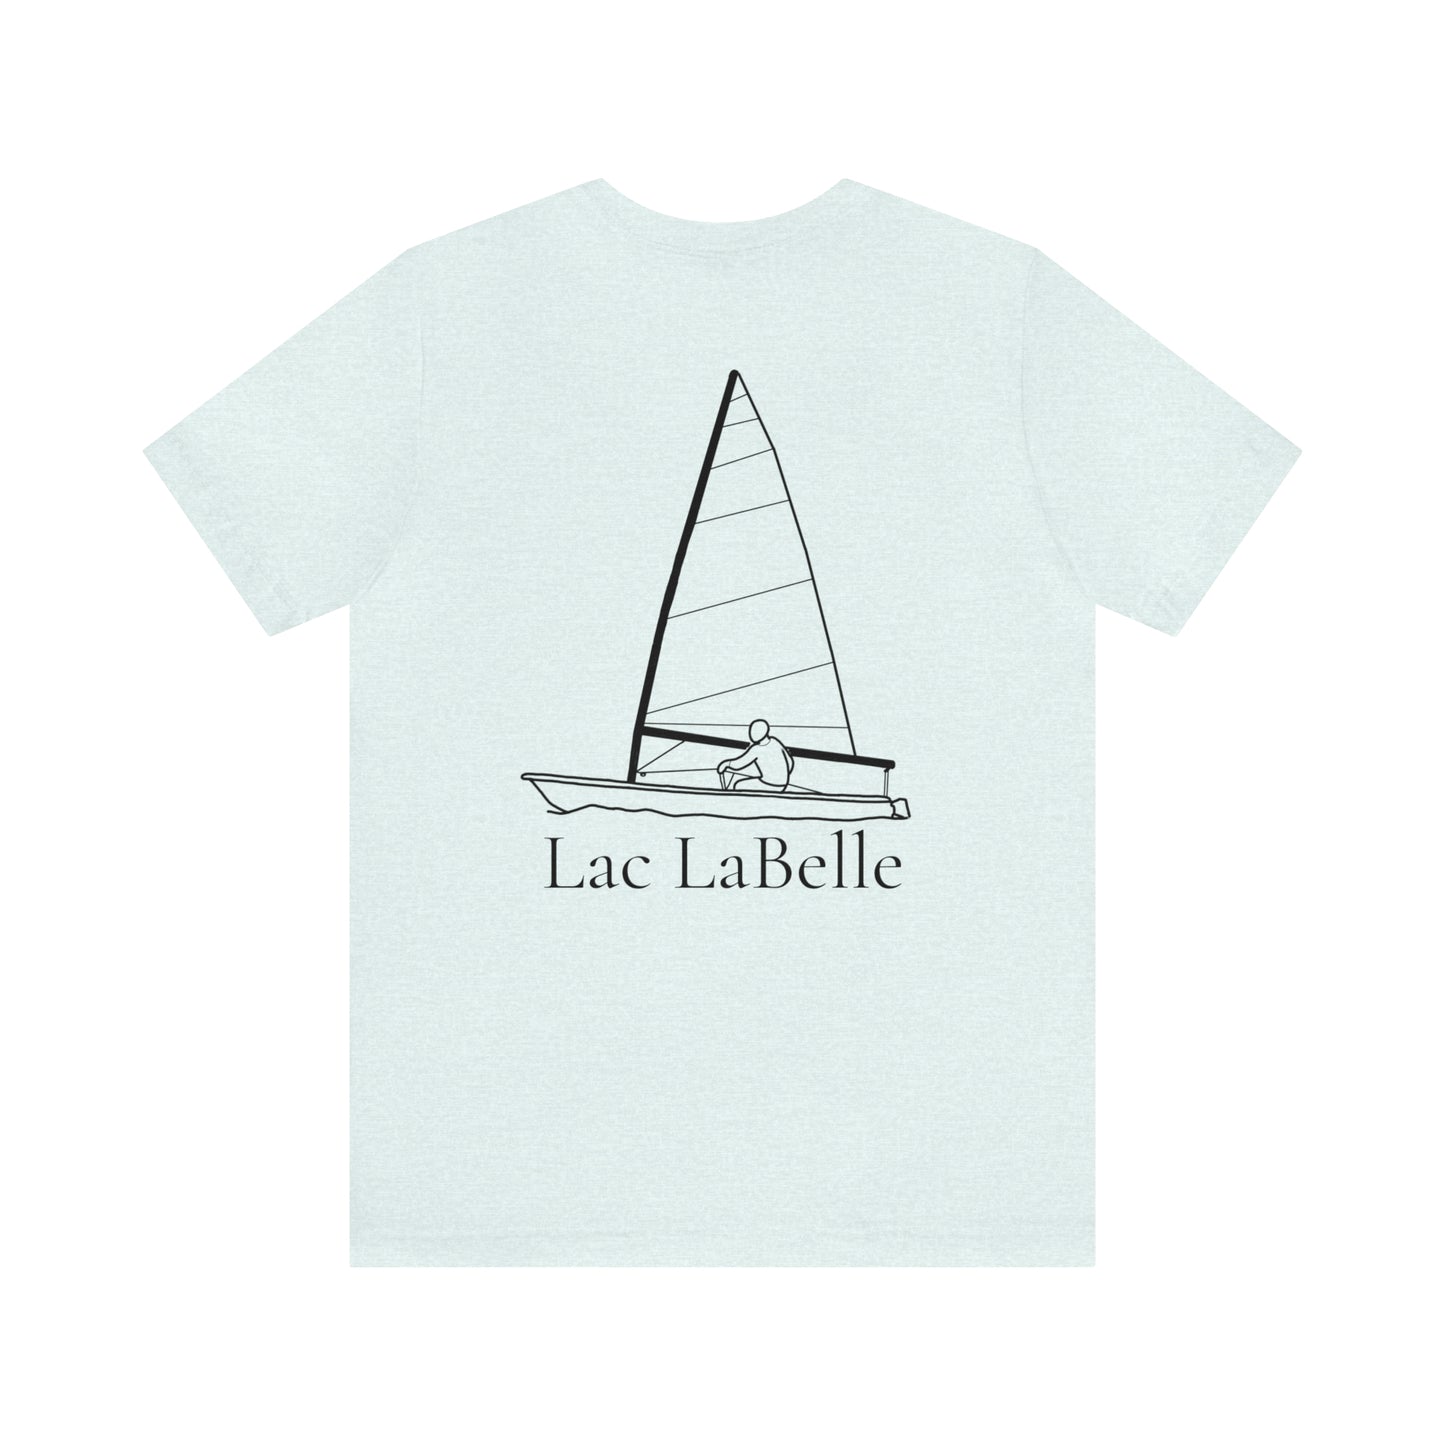 Lac LaBelle, Sailing - Unisex Lightweight Short Sleeve Tee